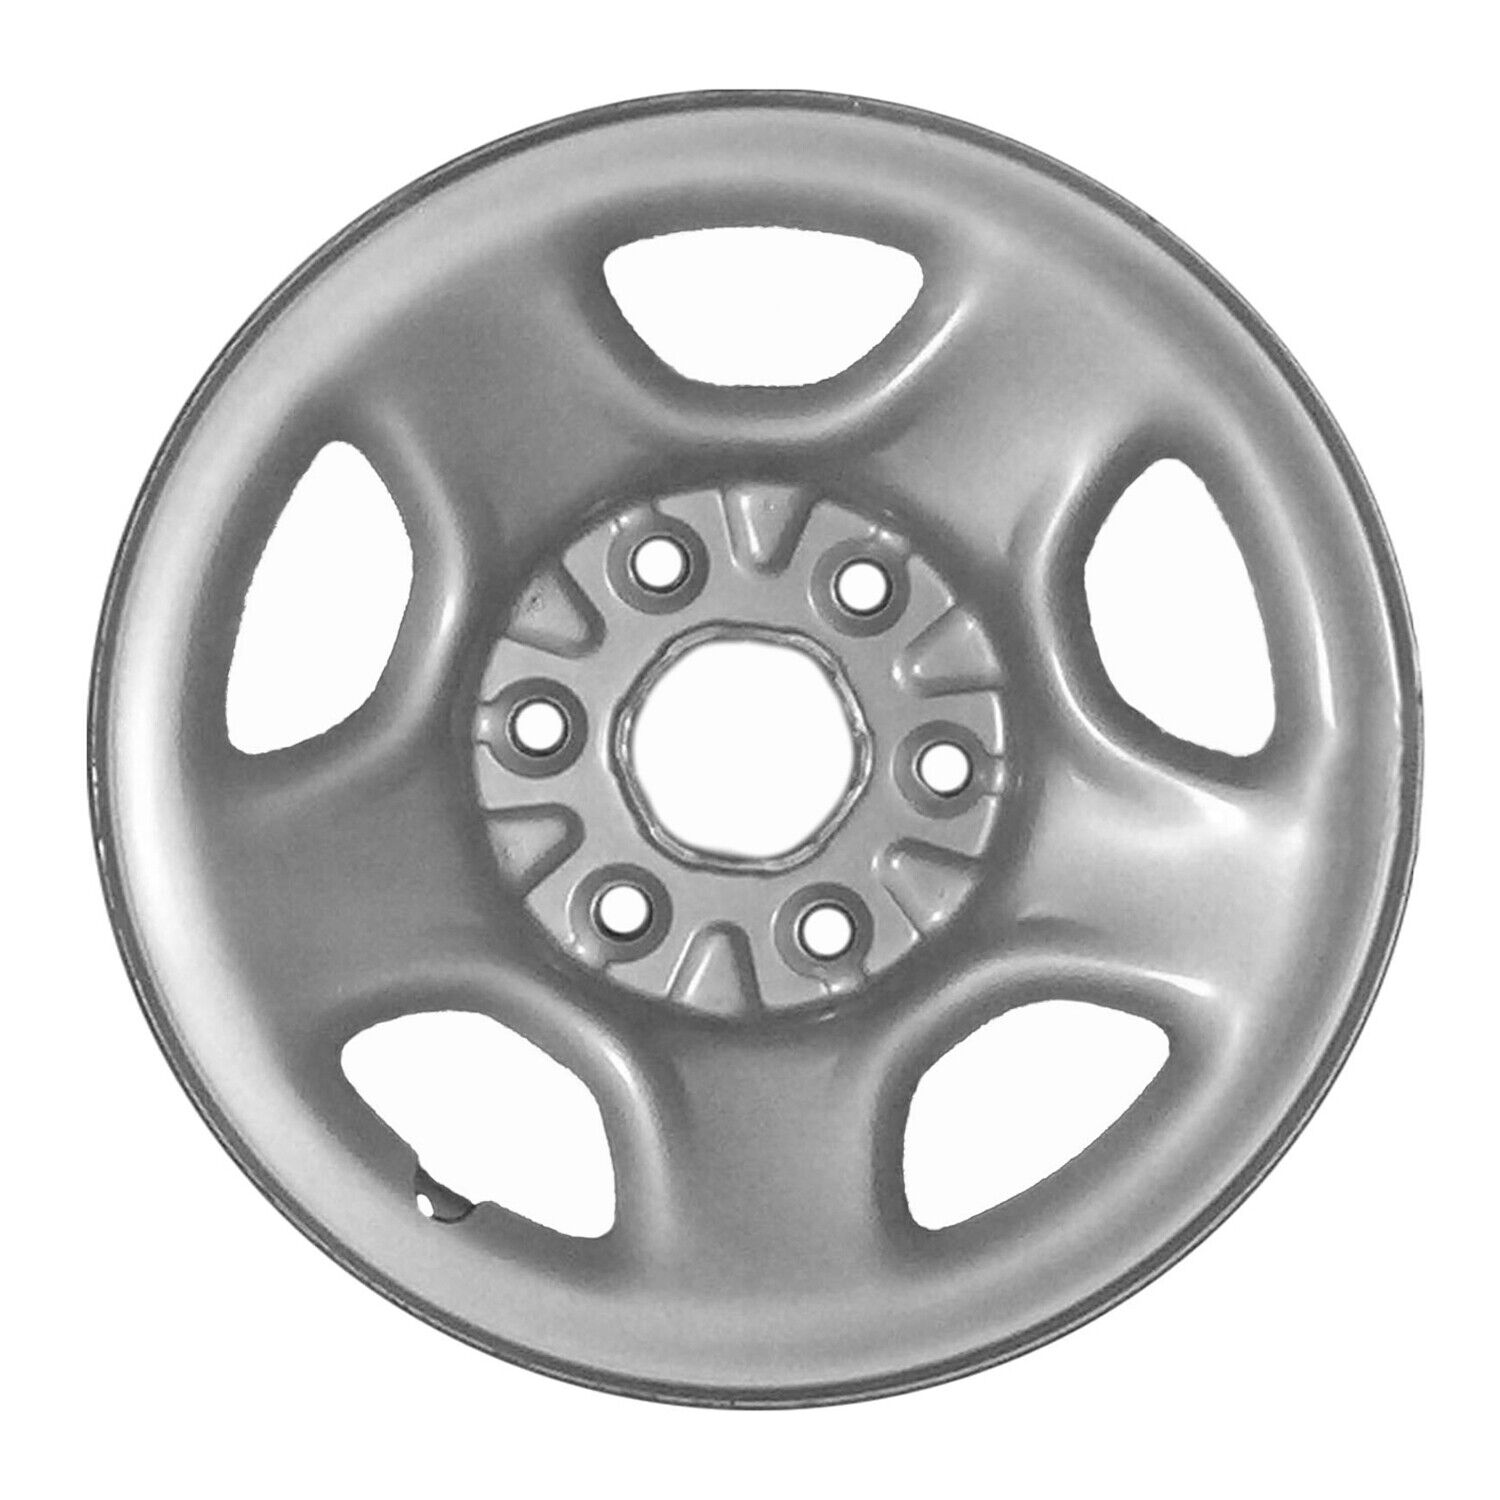 05128 Reconditioned OEM 16x6.5 Silver Steel Wheel fits 2003-2005 Astro Van